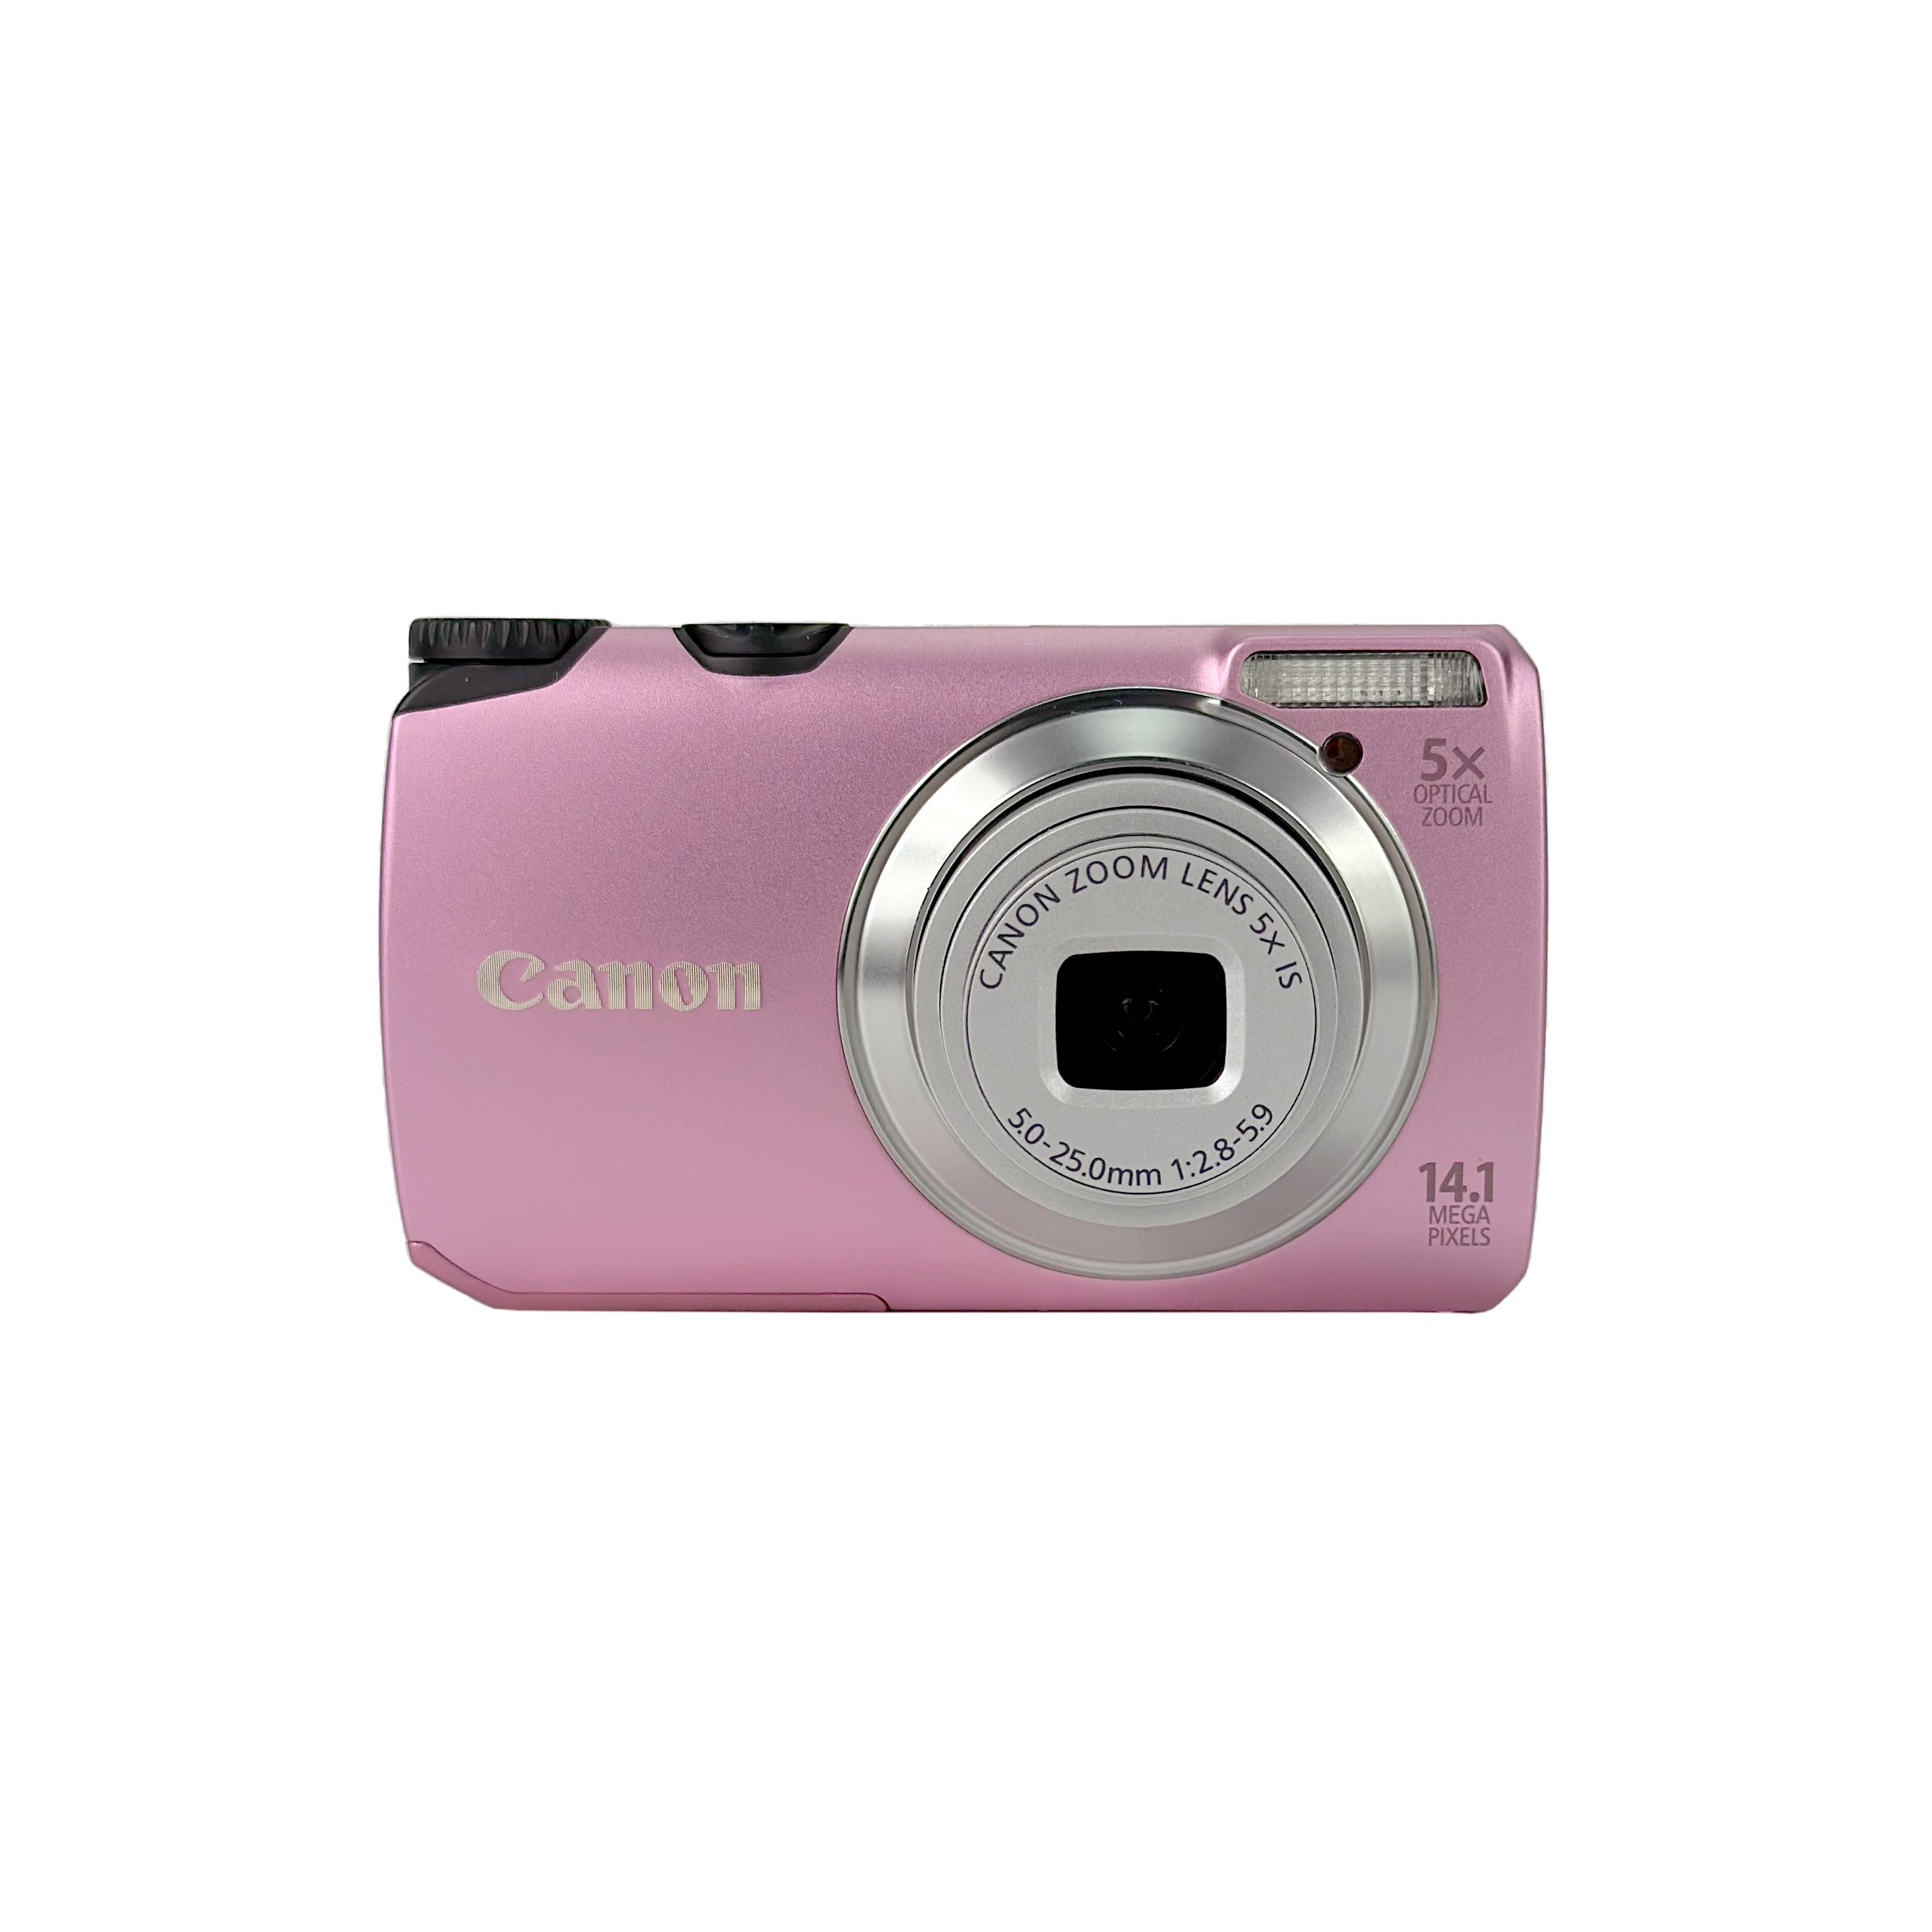 Canon Powershot A3200 IS Digital Compact - Pink – Retro Camera Shop